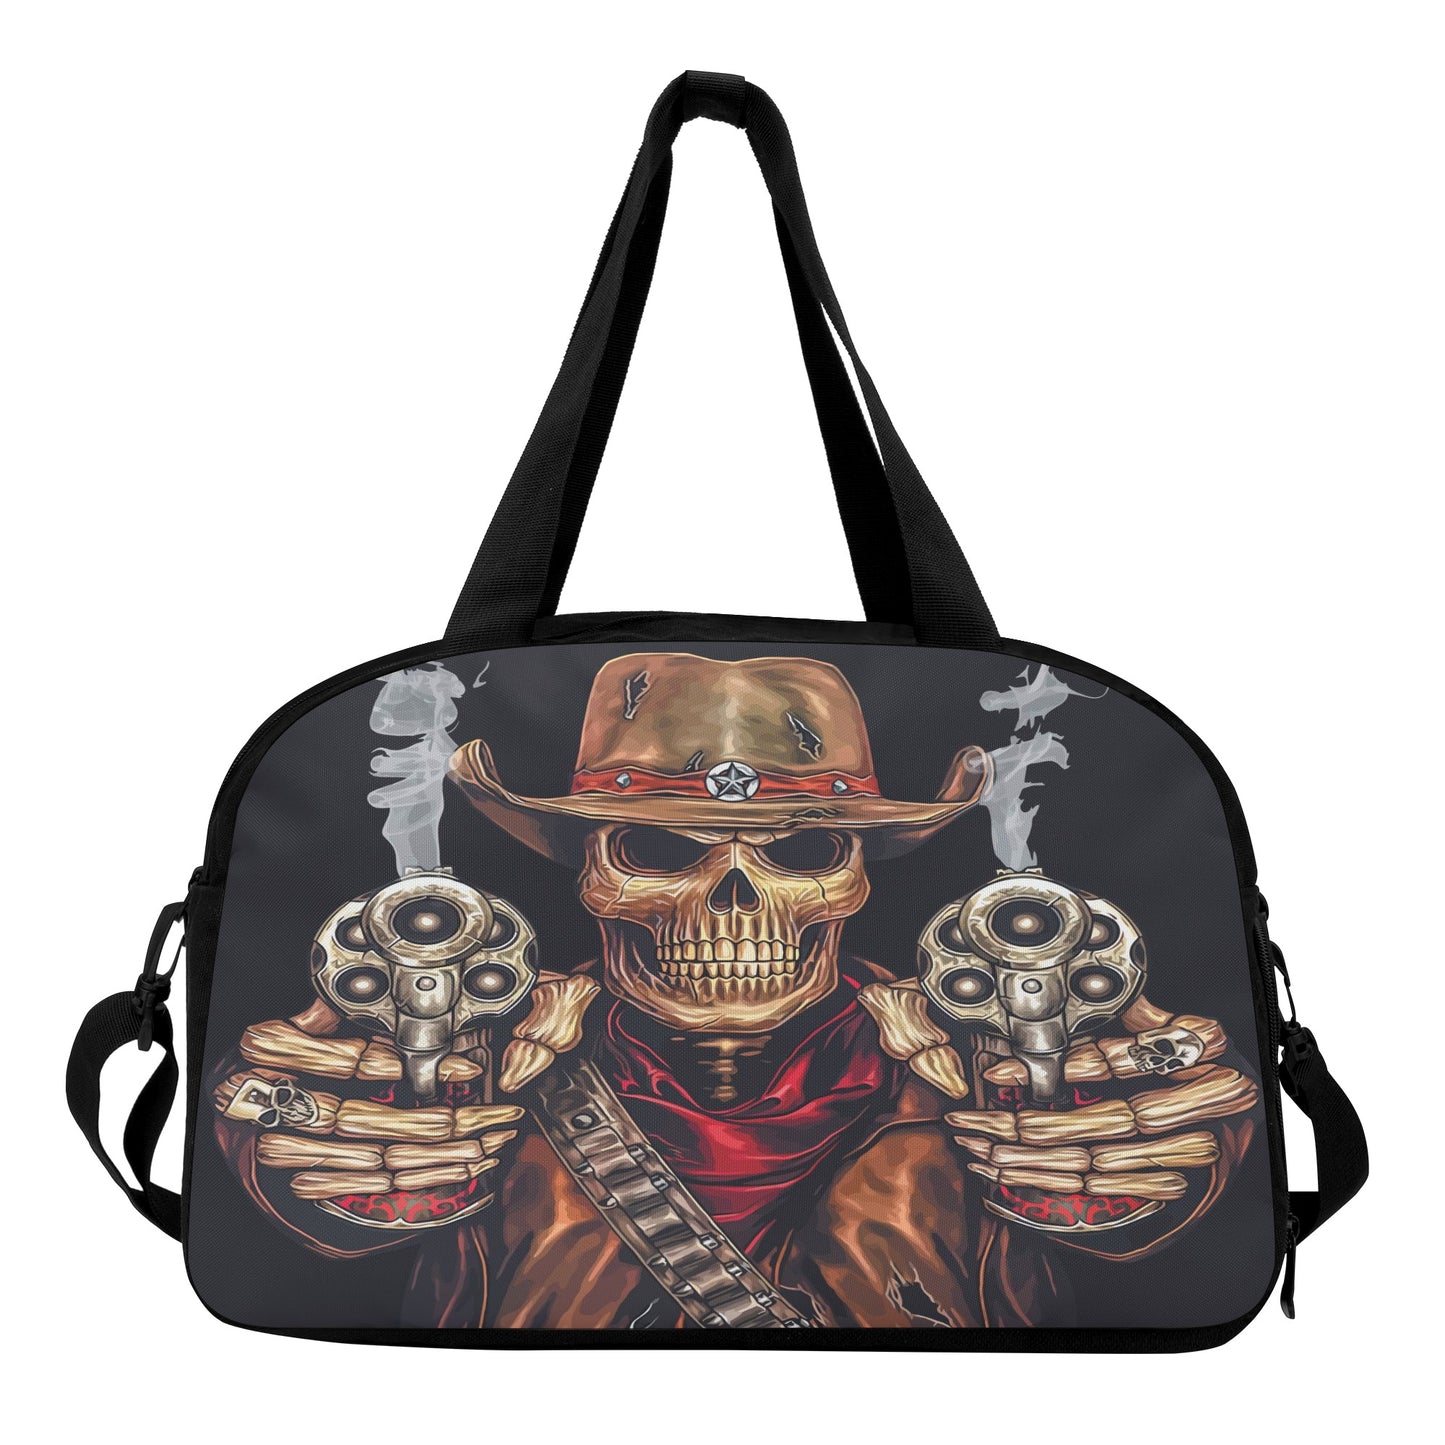 Grim reaper skull Travel Luggage Bag